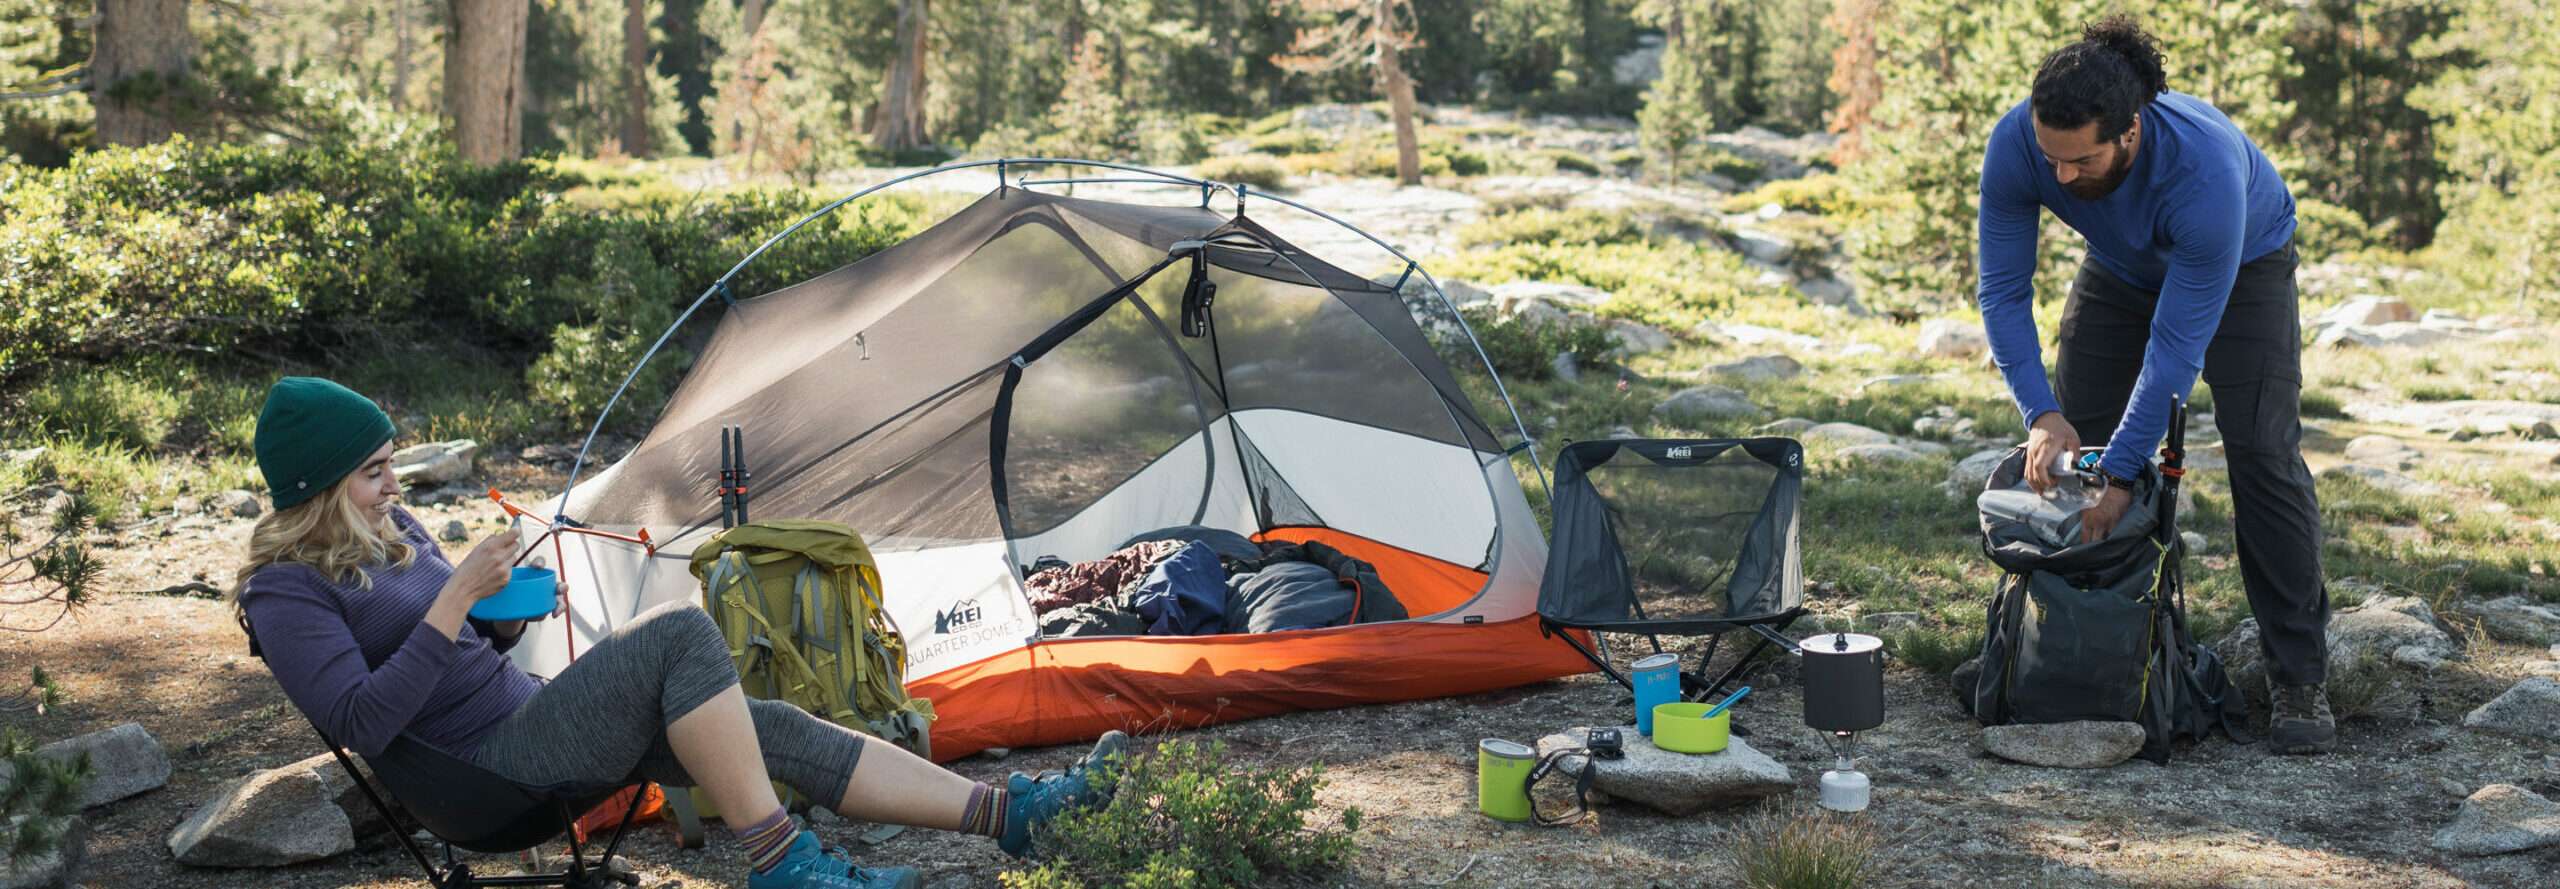 Arizona Camping Gear Rentals